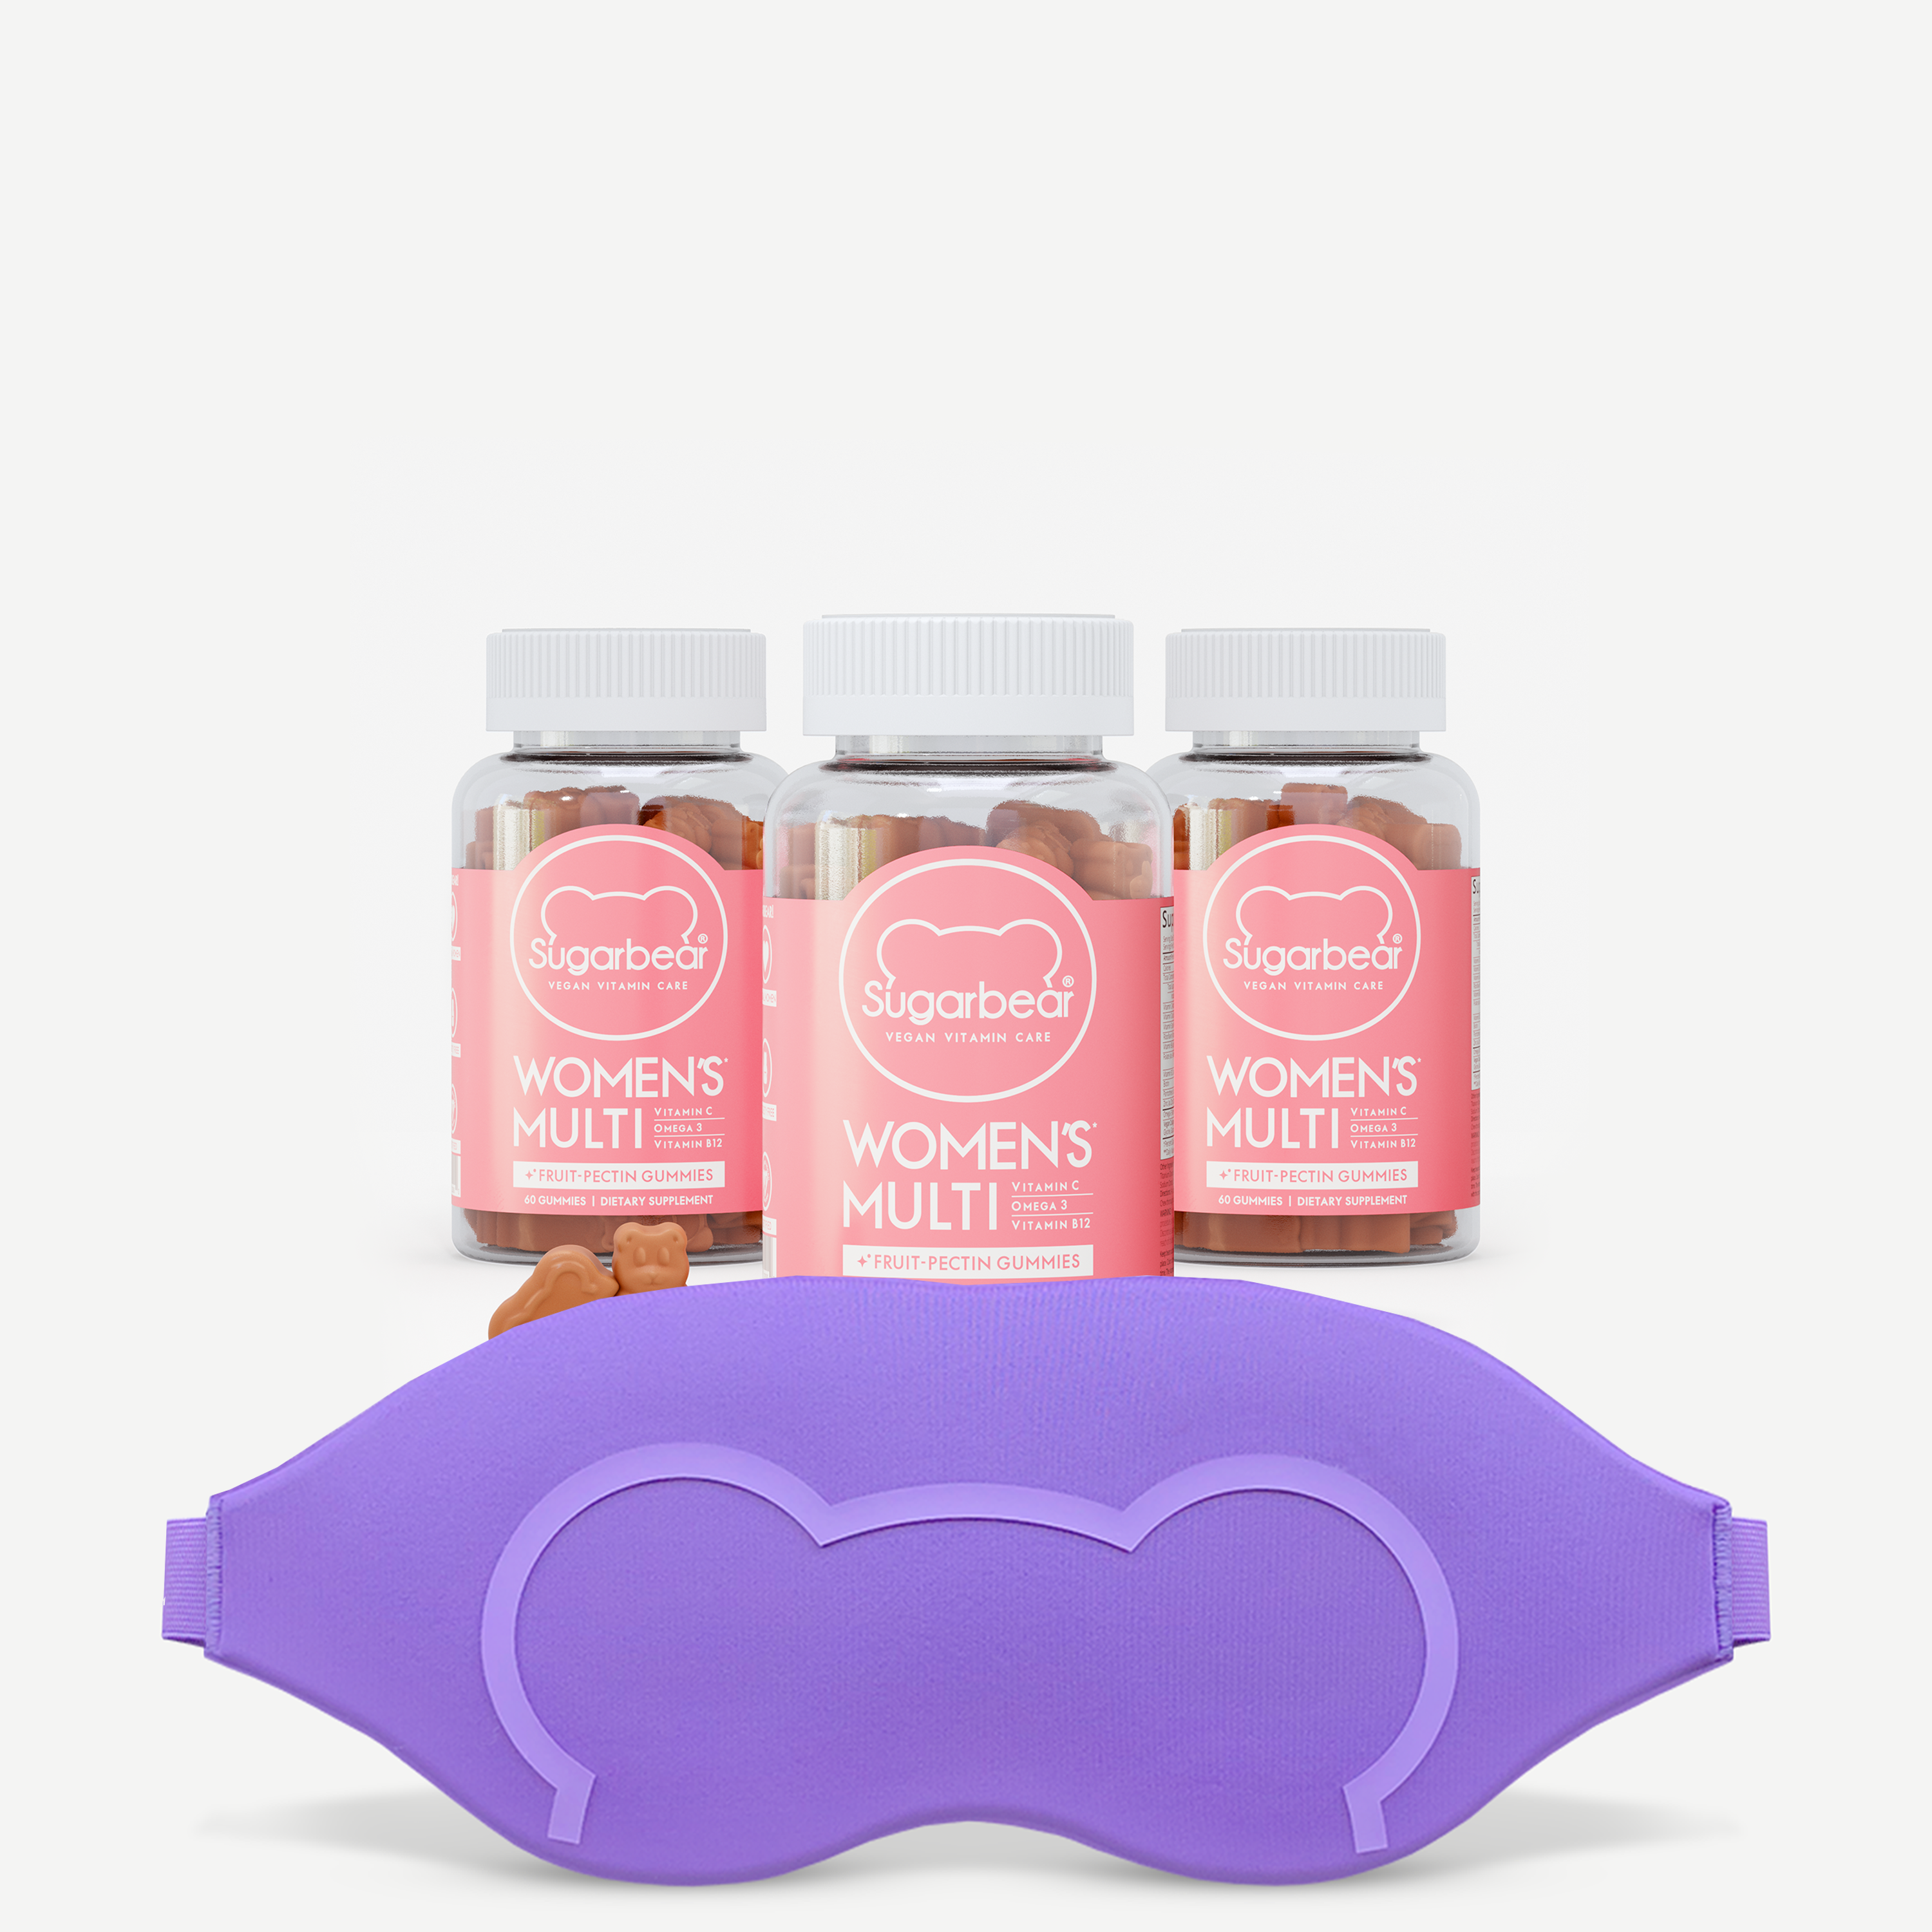 Sugarbear Women's Multi Vitamins - 3 Month Pack + Free Gift